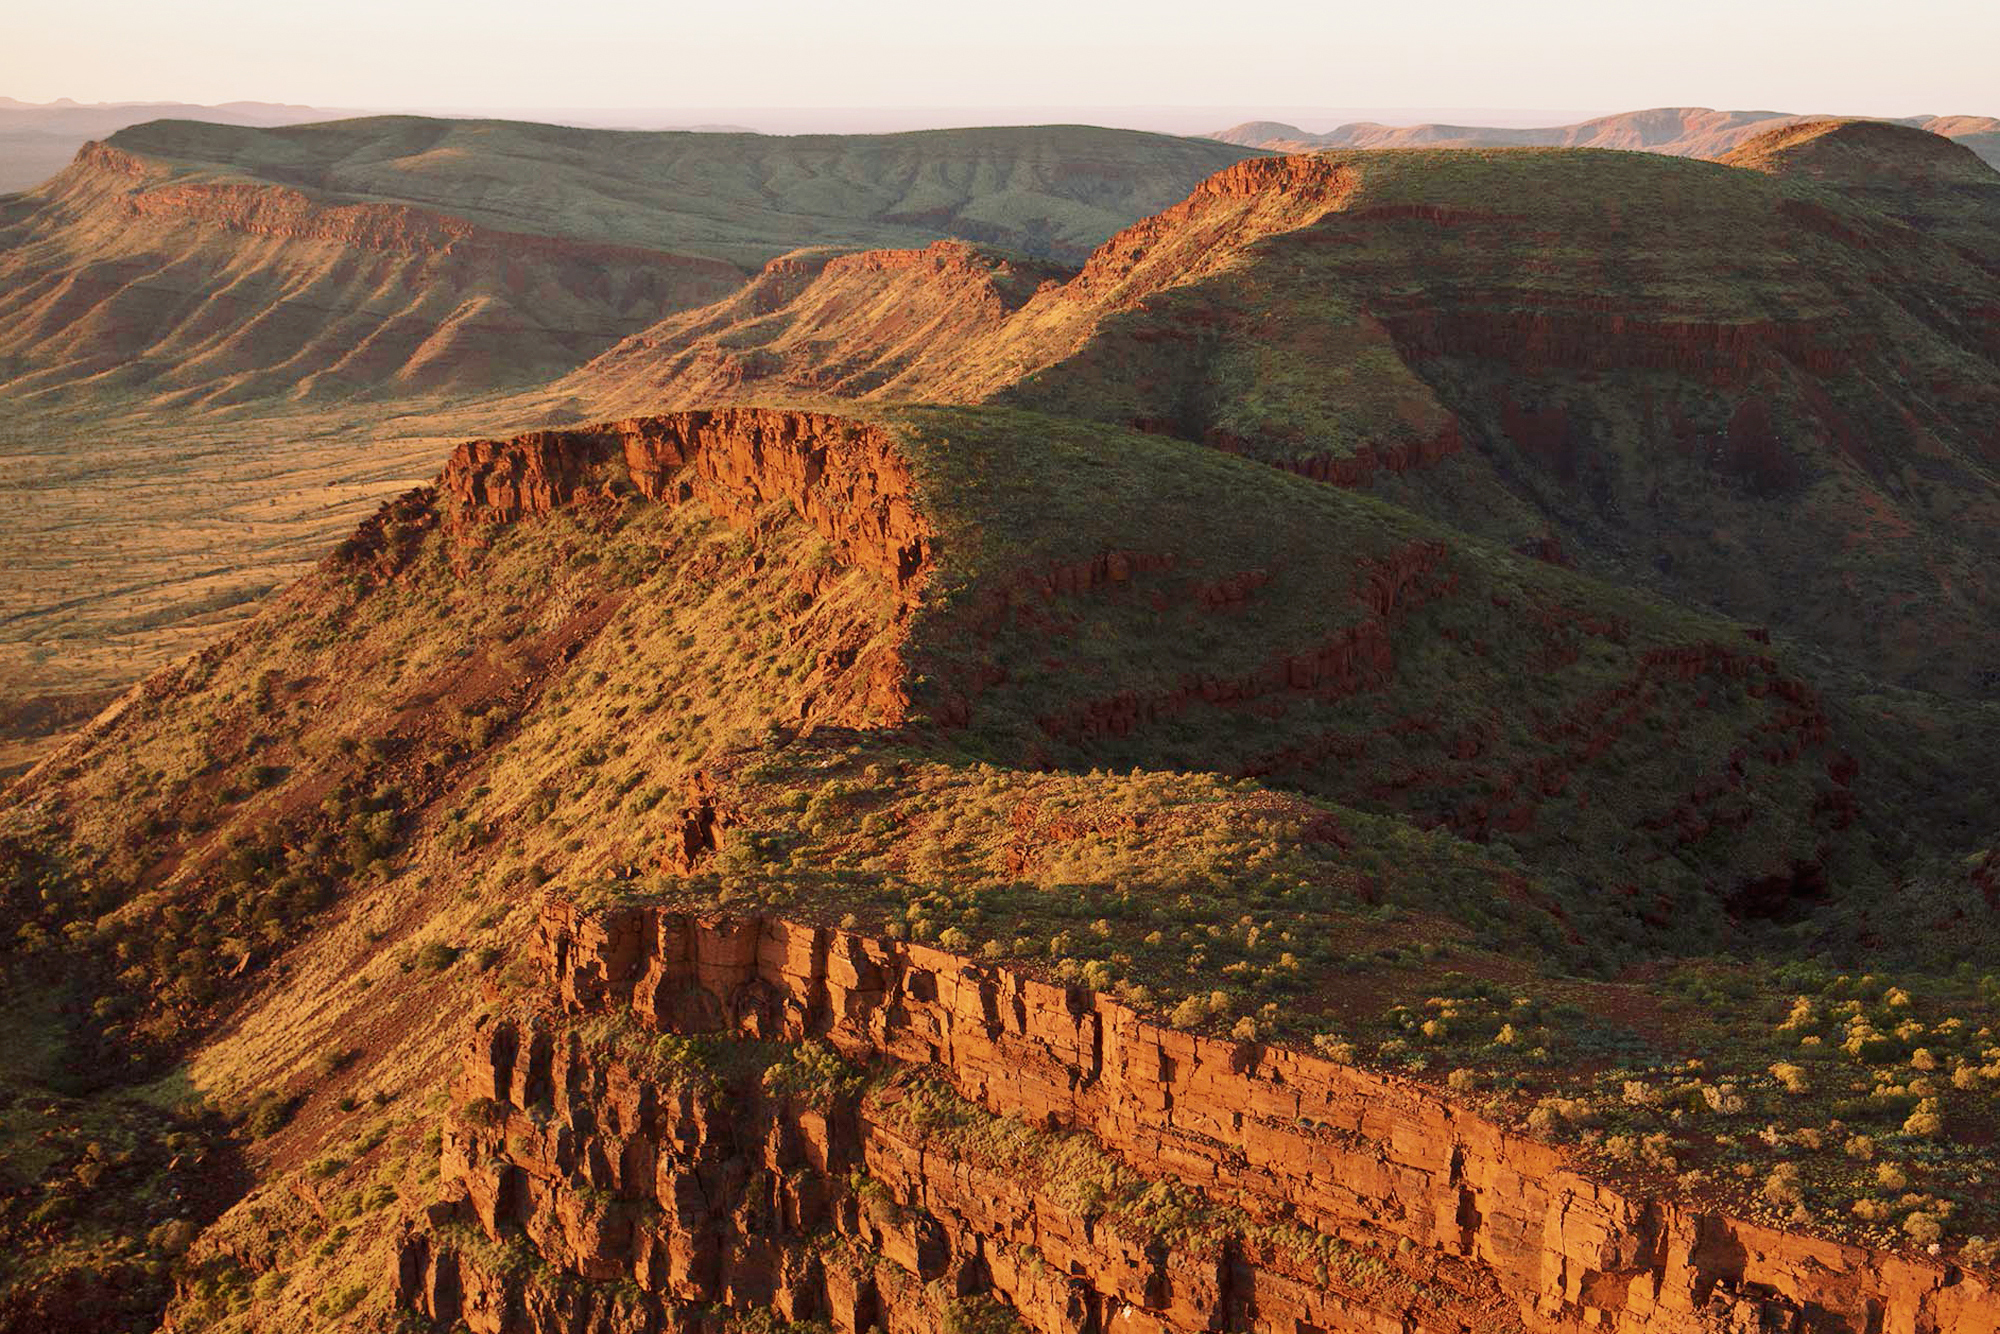 The Kimberley region of north western Australia